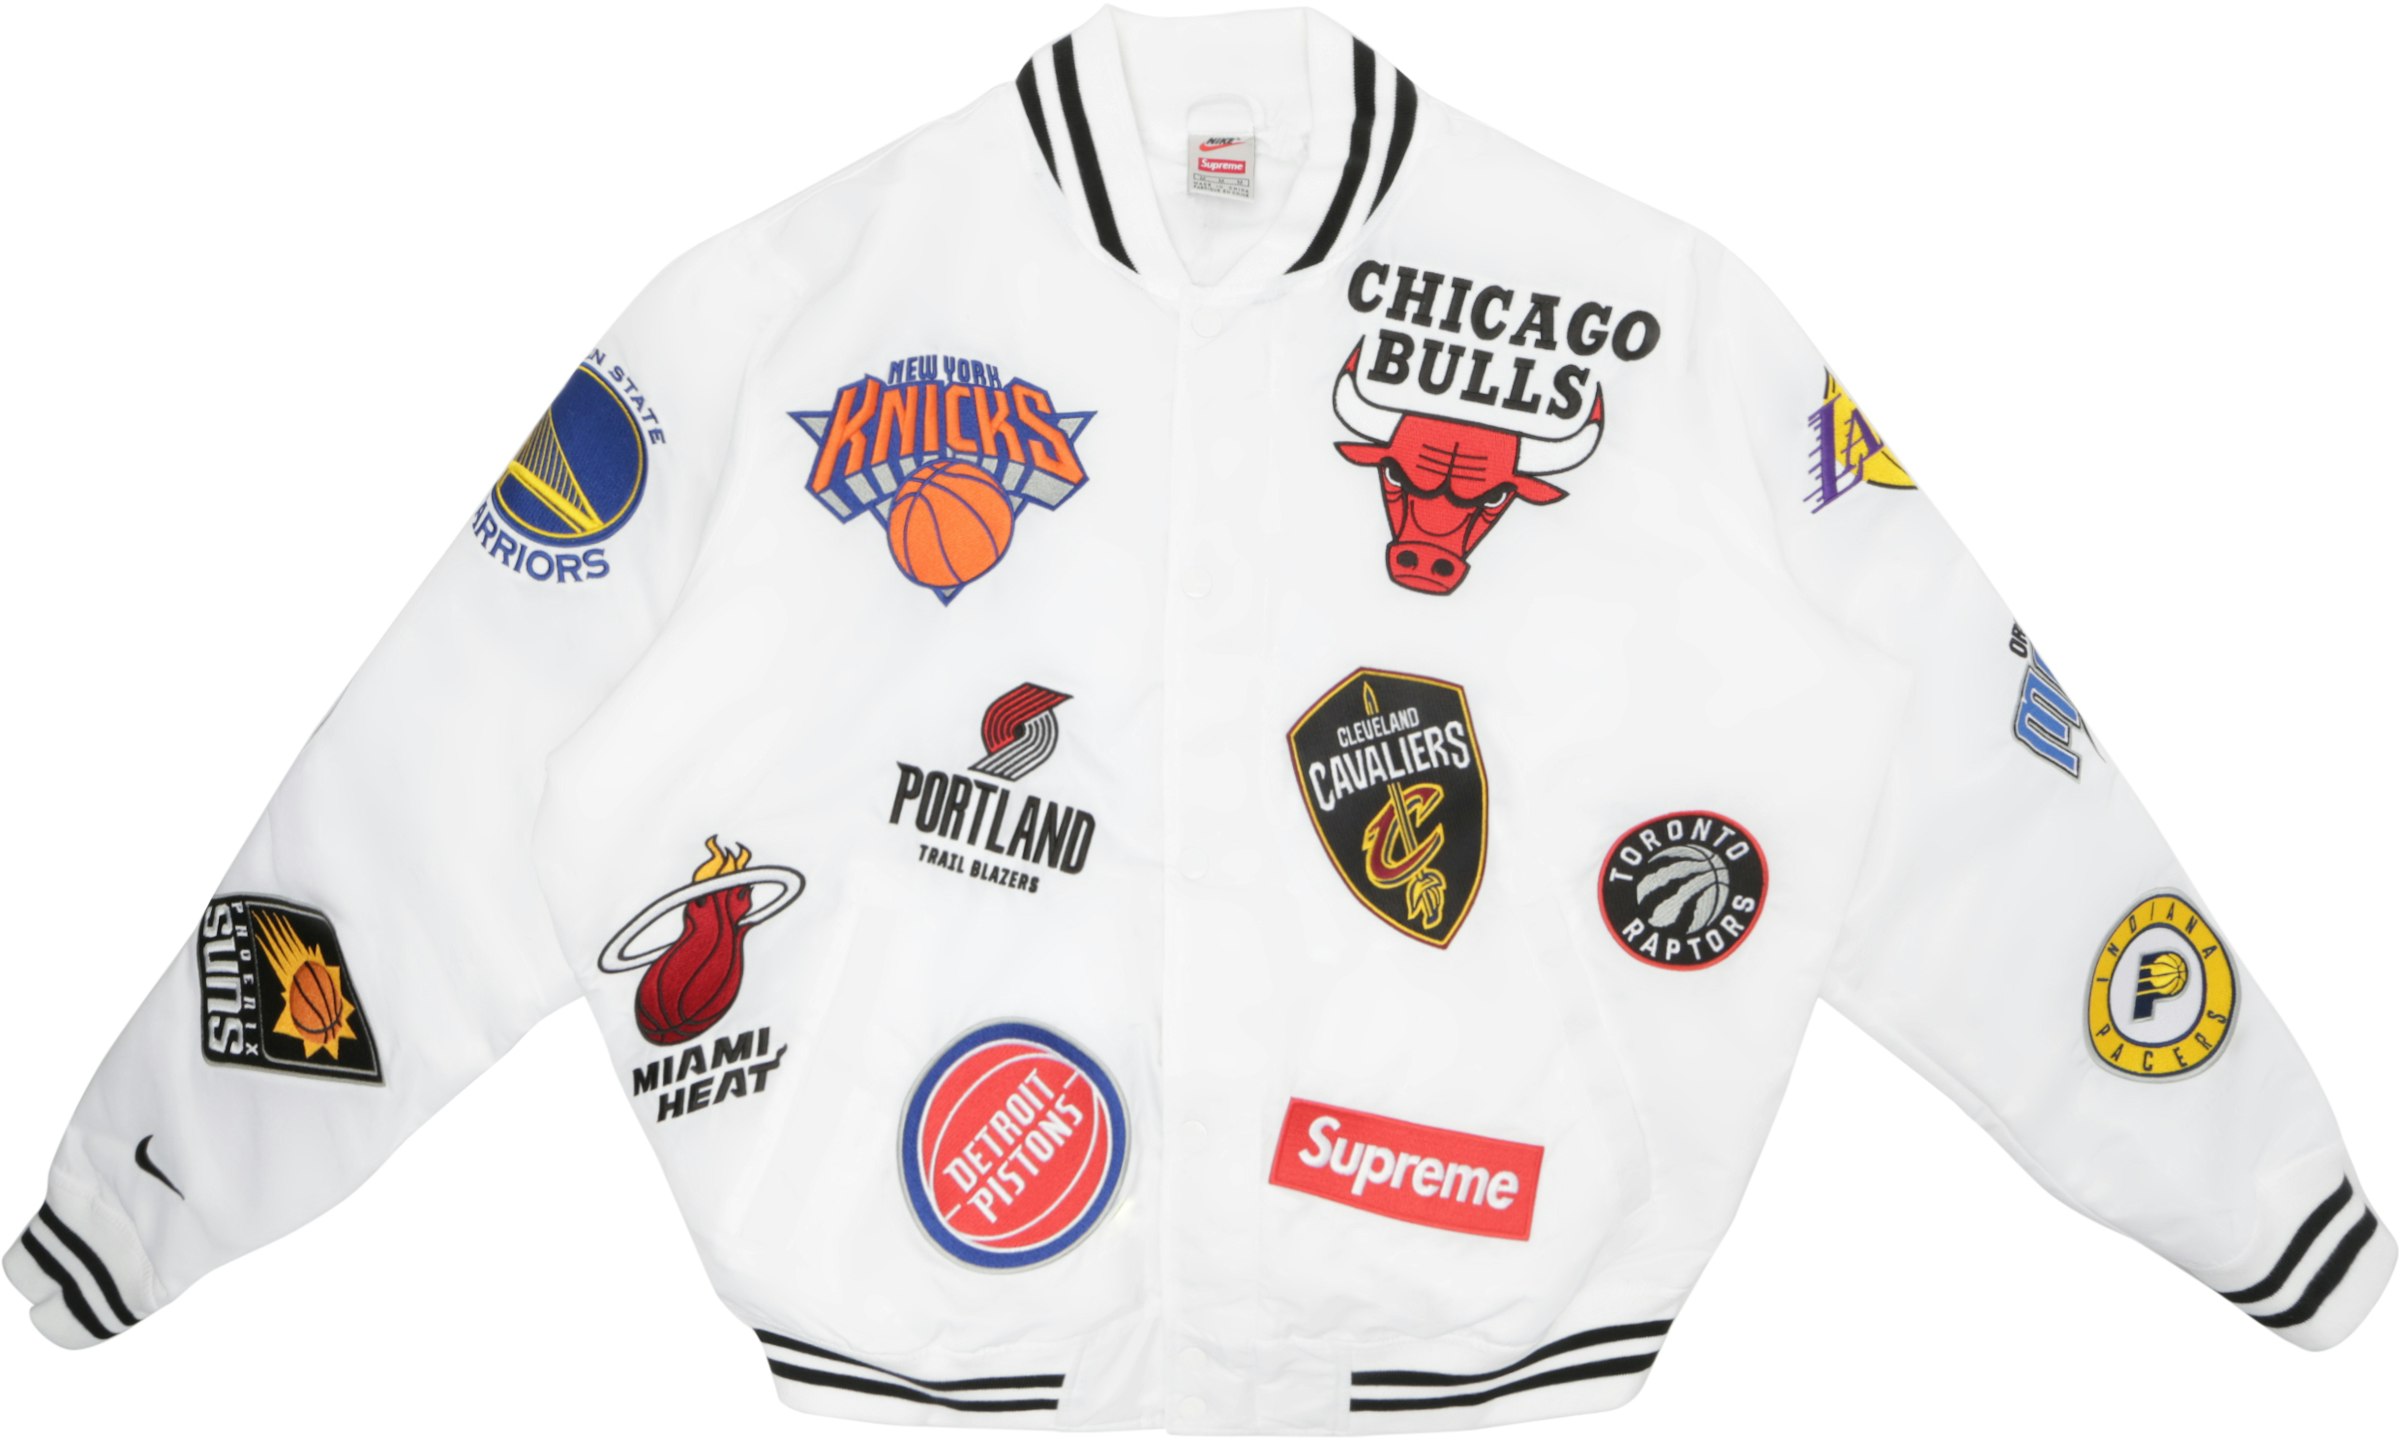 Nike/NBA Teams Warm-Up Jacket White SS18 Men's - US